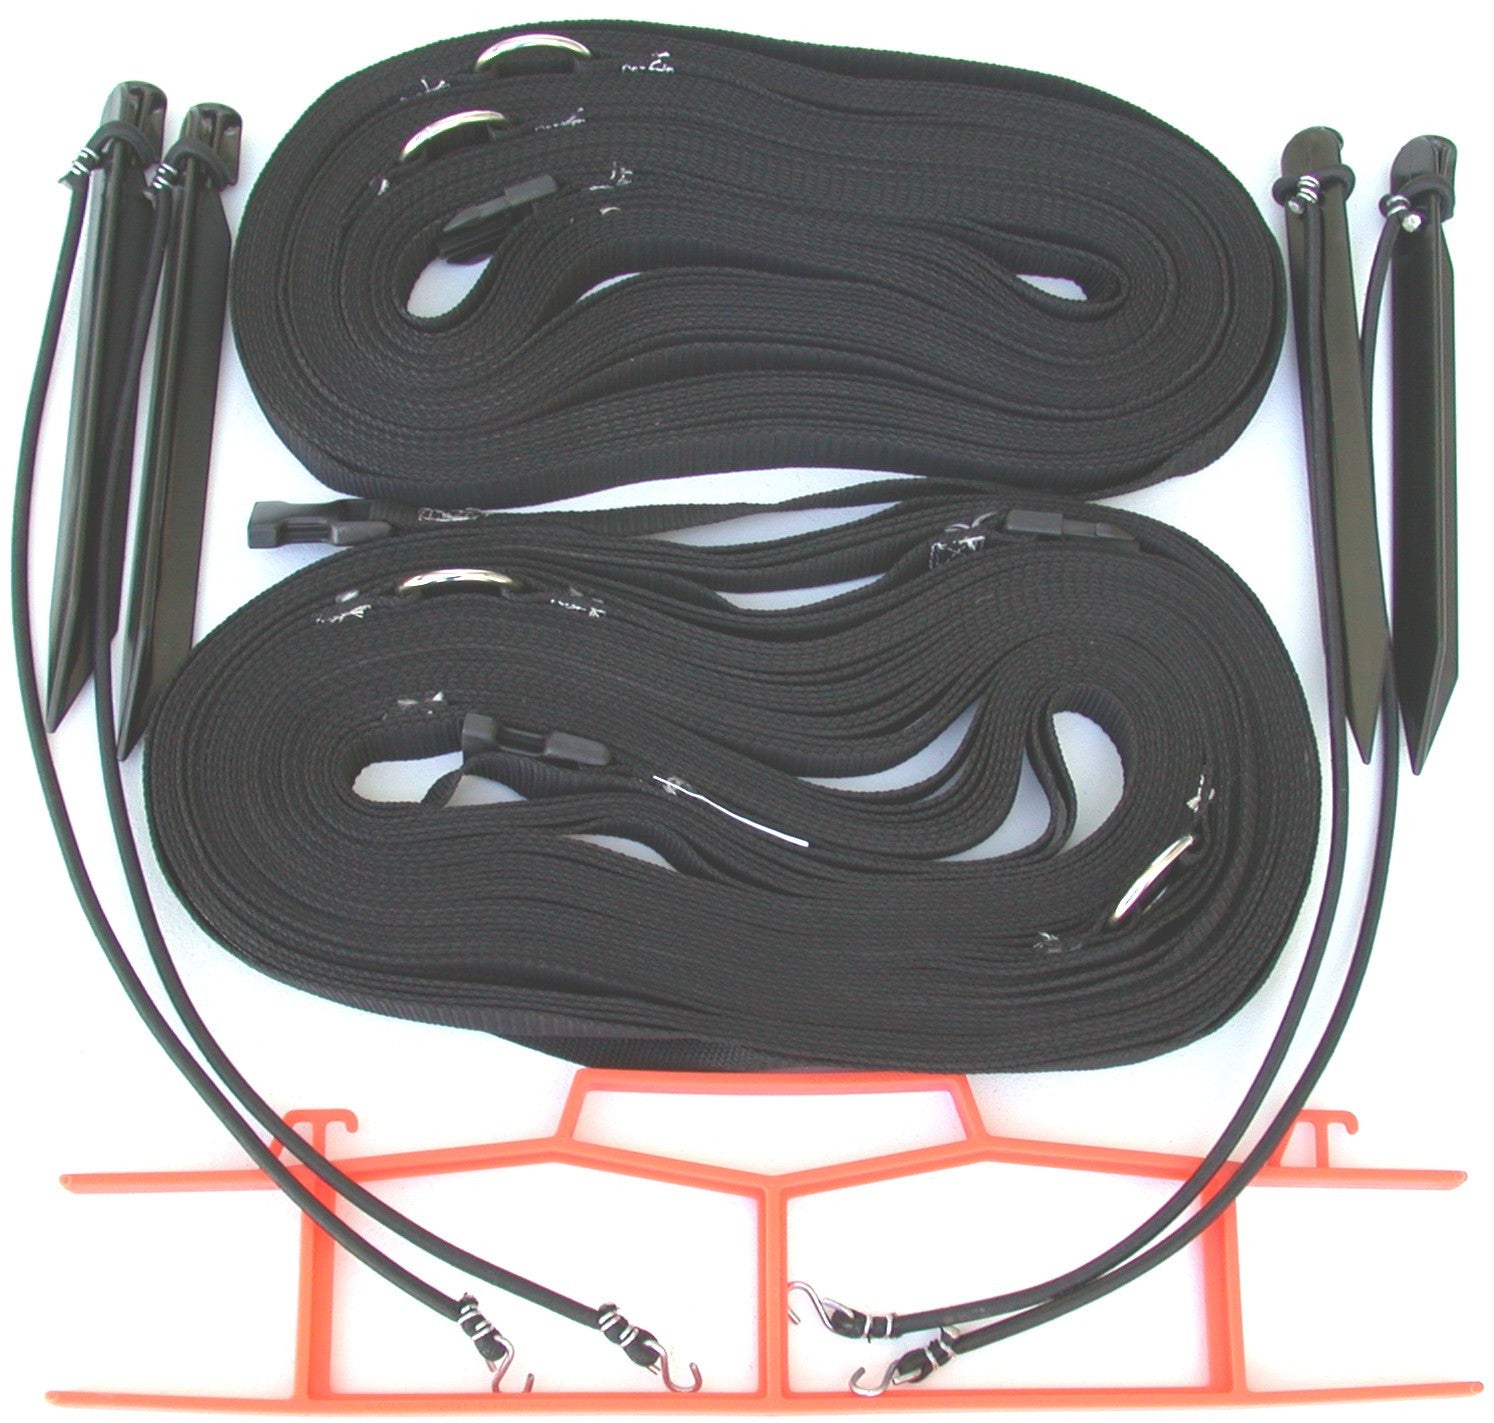 17NABKS-black 1-inch non-adjustable web boundary, sand pegs, storage winder